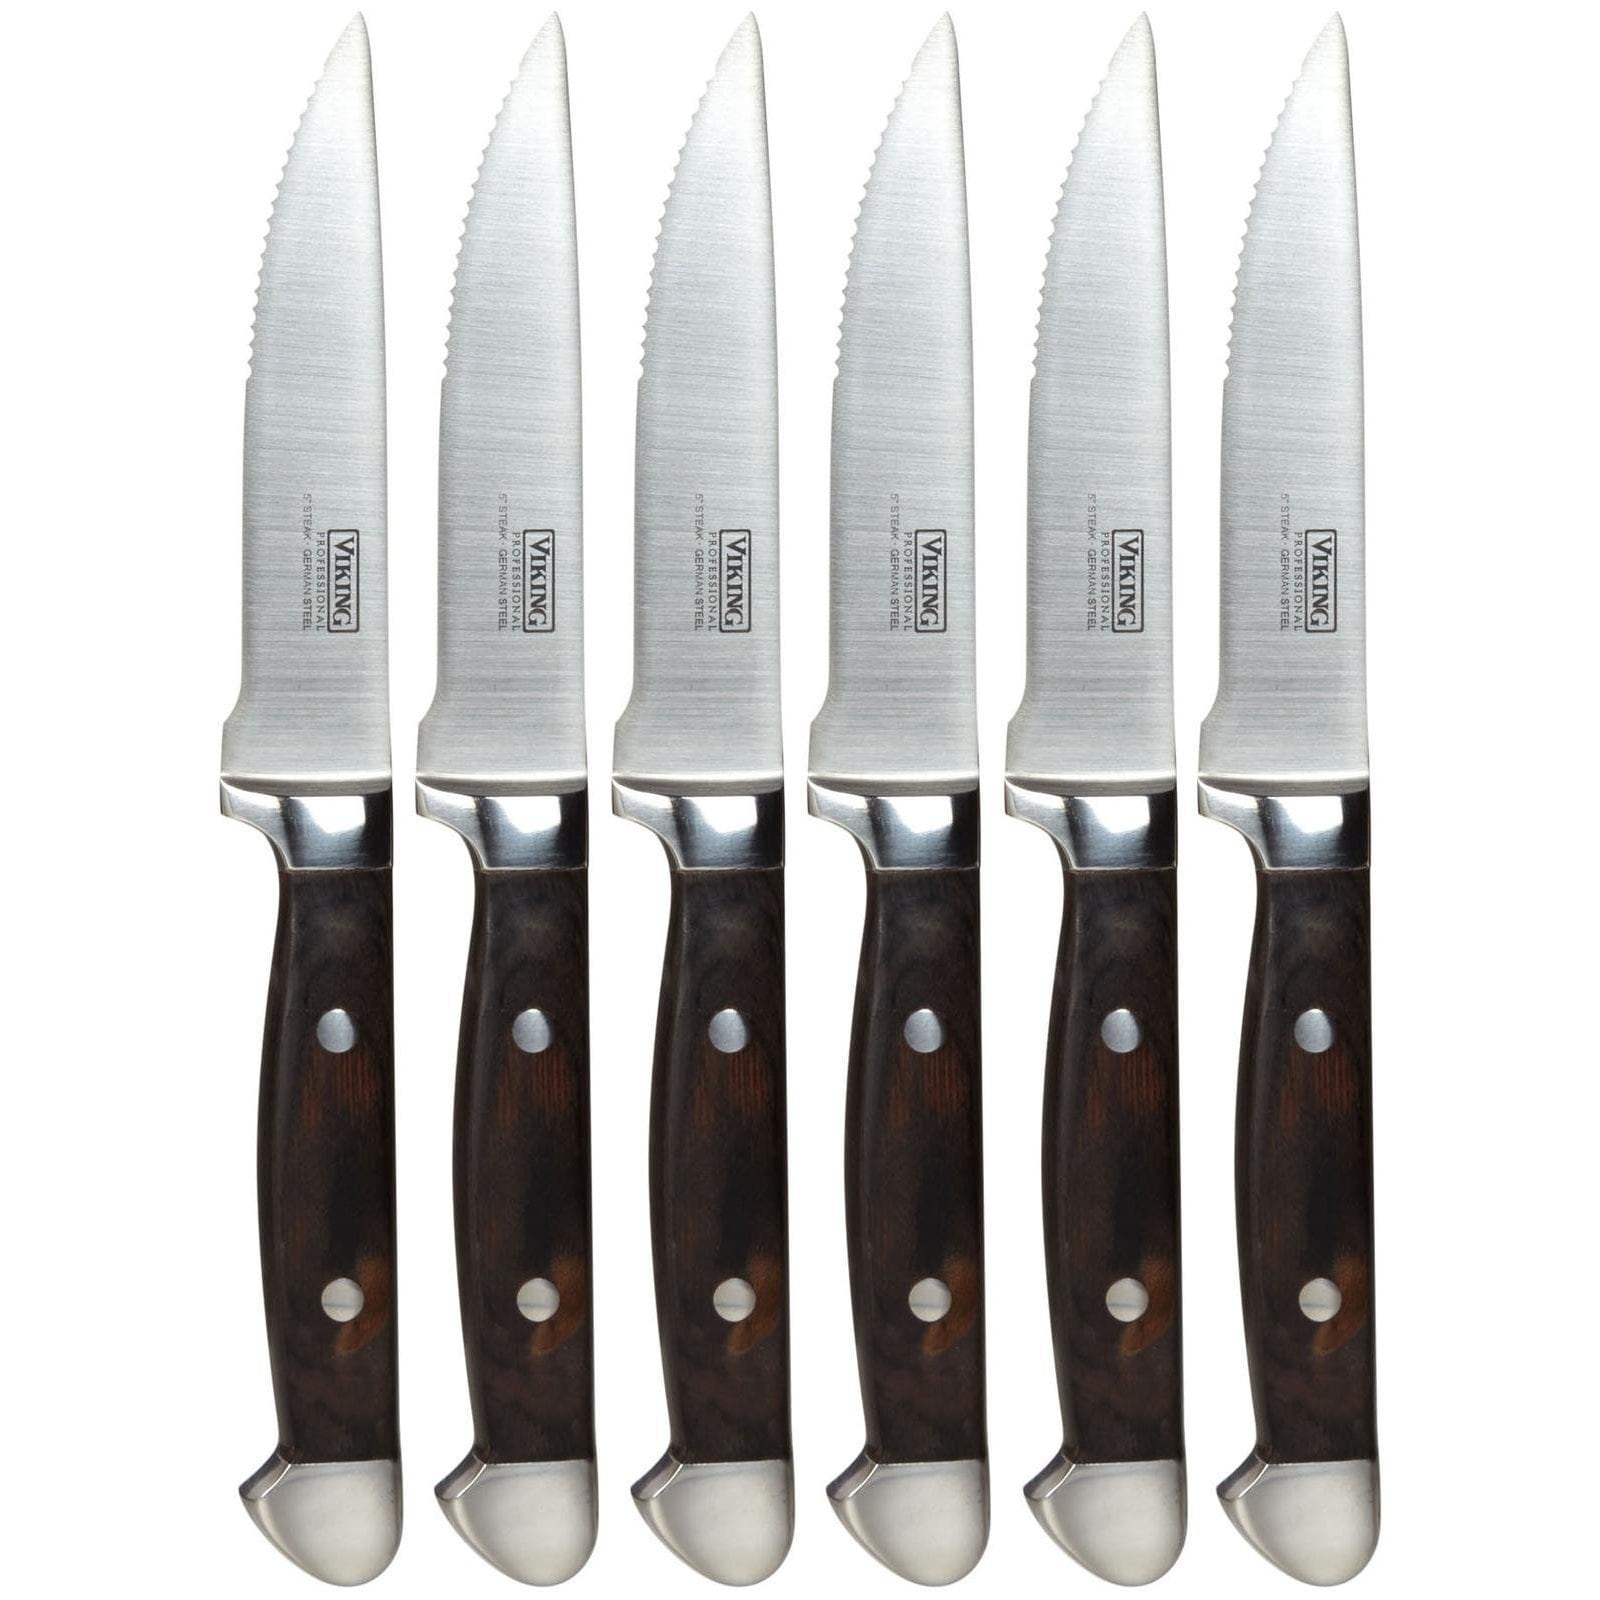 https://ak1.ostkcdn.com/images/products/11892668/Viking-Black-Pakka-Wood-6-pc-Steak-Knife-Set-w-Rubberwood-Box-a8878205-d744-46a0-a108-de518e8d119a.jpg